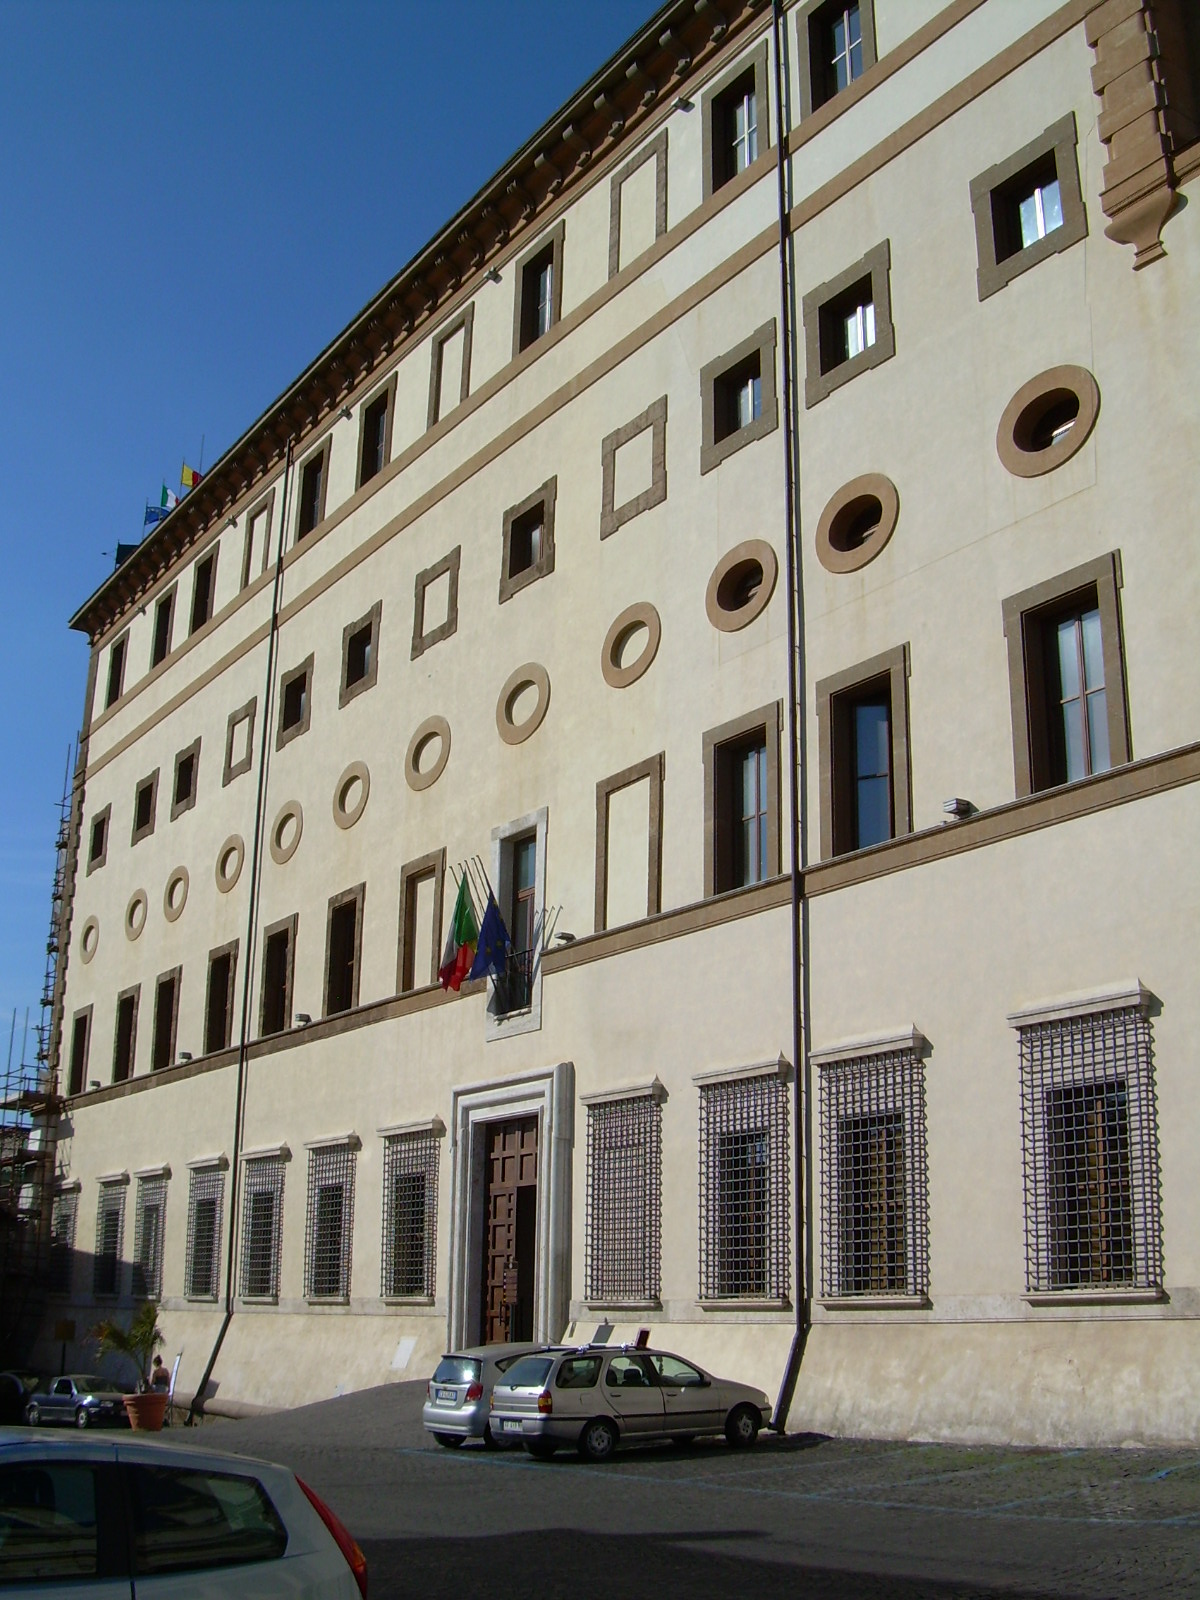 Palazzo Doria-Pamphilj (Valmontone) - Wikipedia